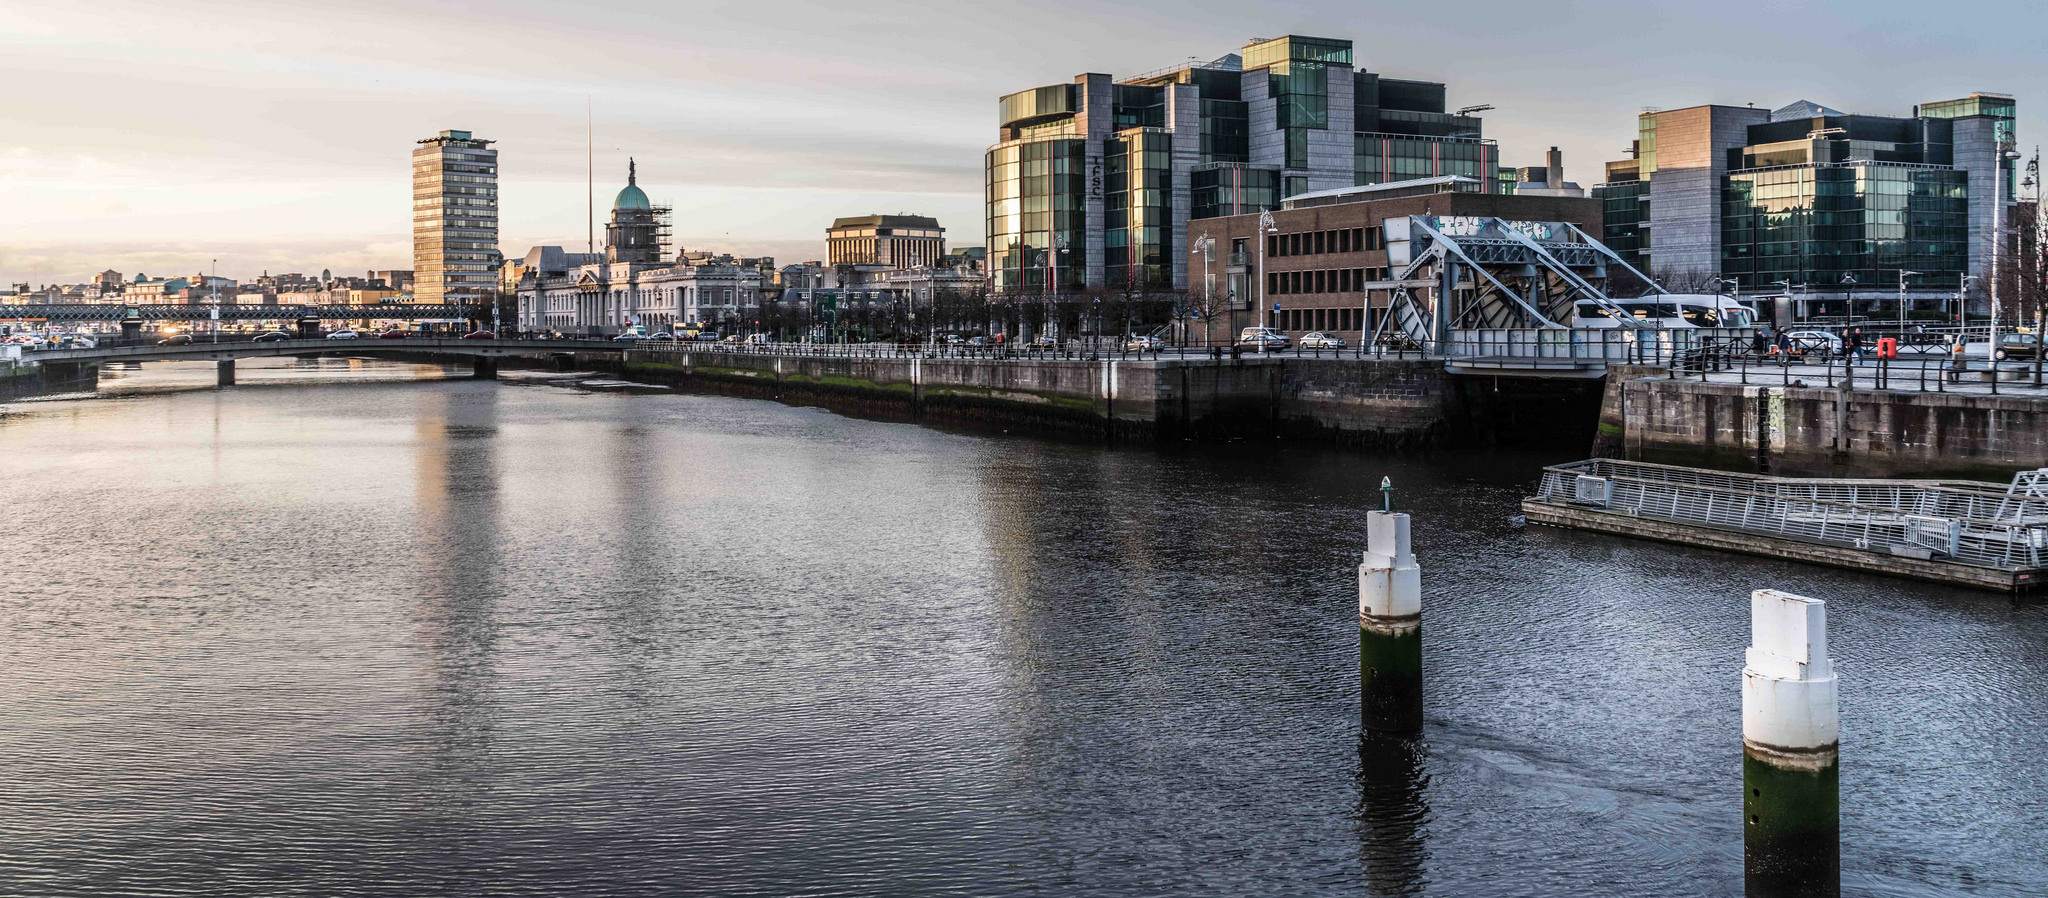 dublin docklands4 Walking Around Dublin Docklands by Marphy